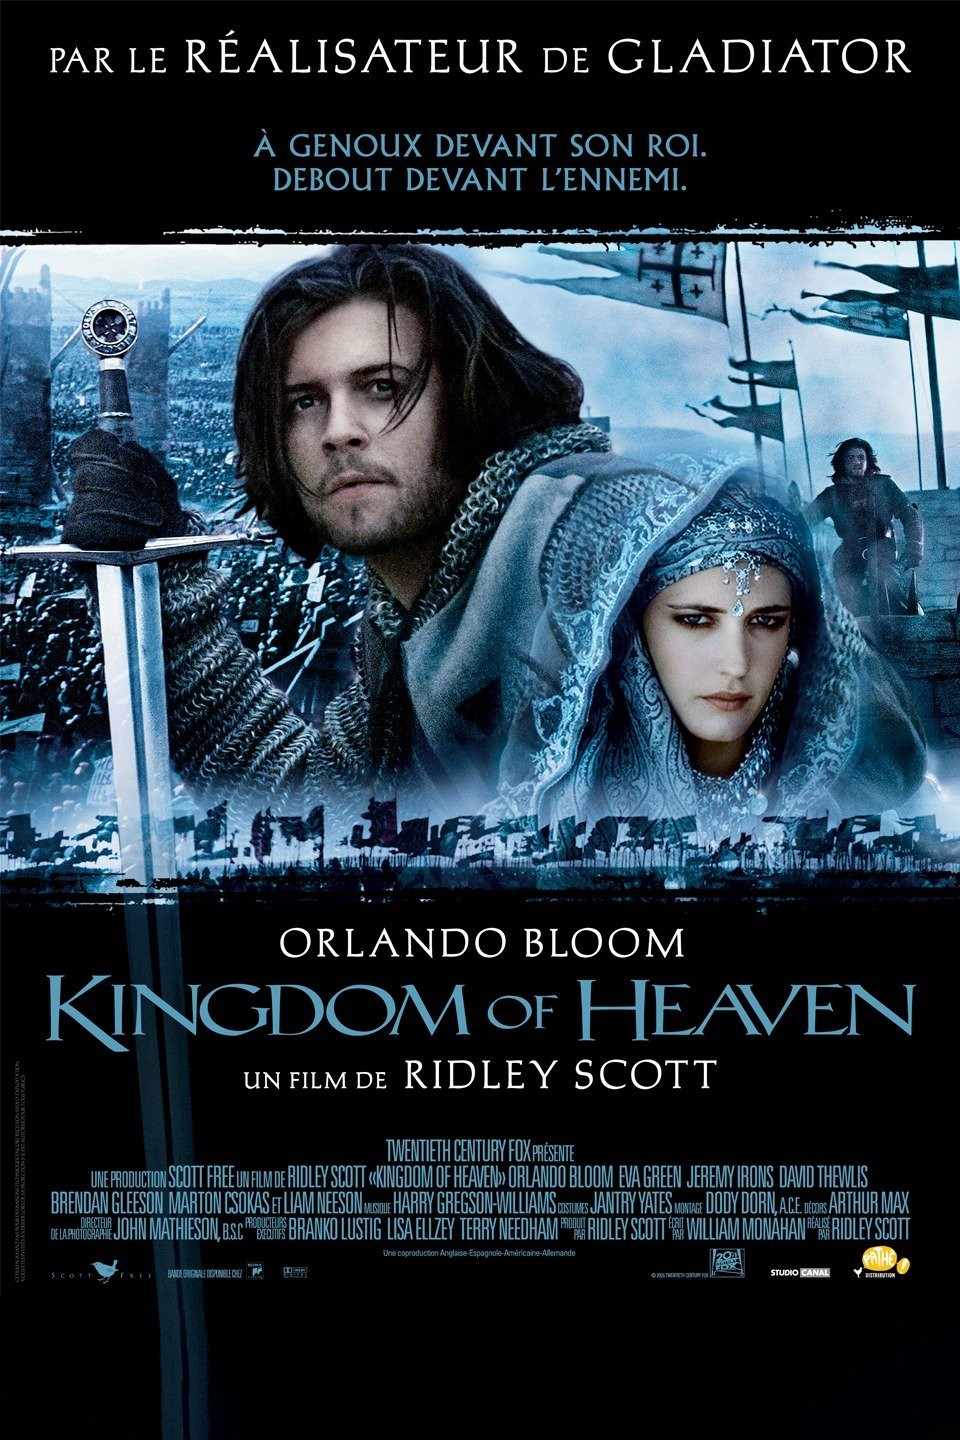 My Kingdom (2011) - IMDb